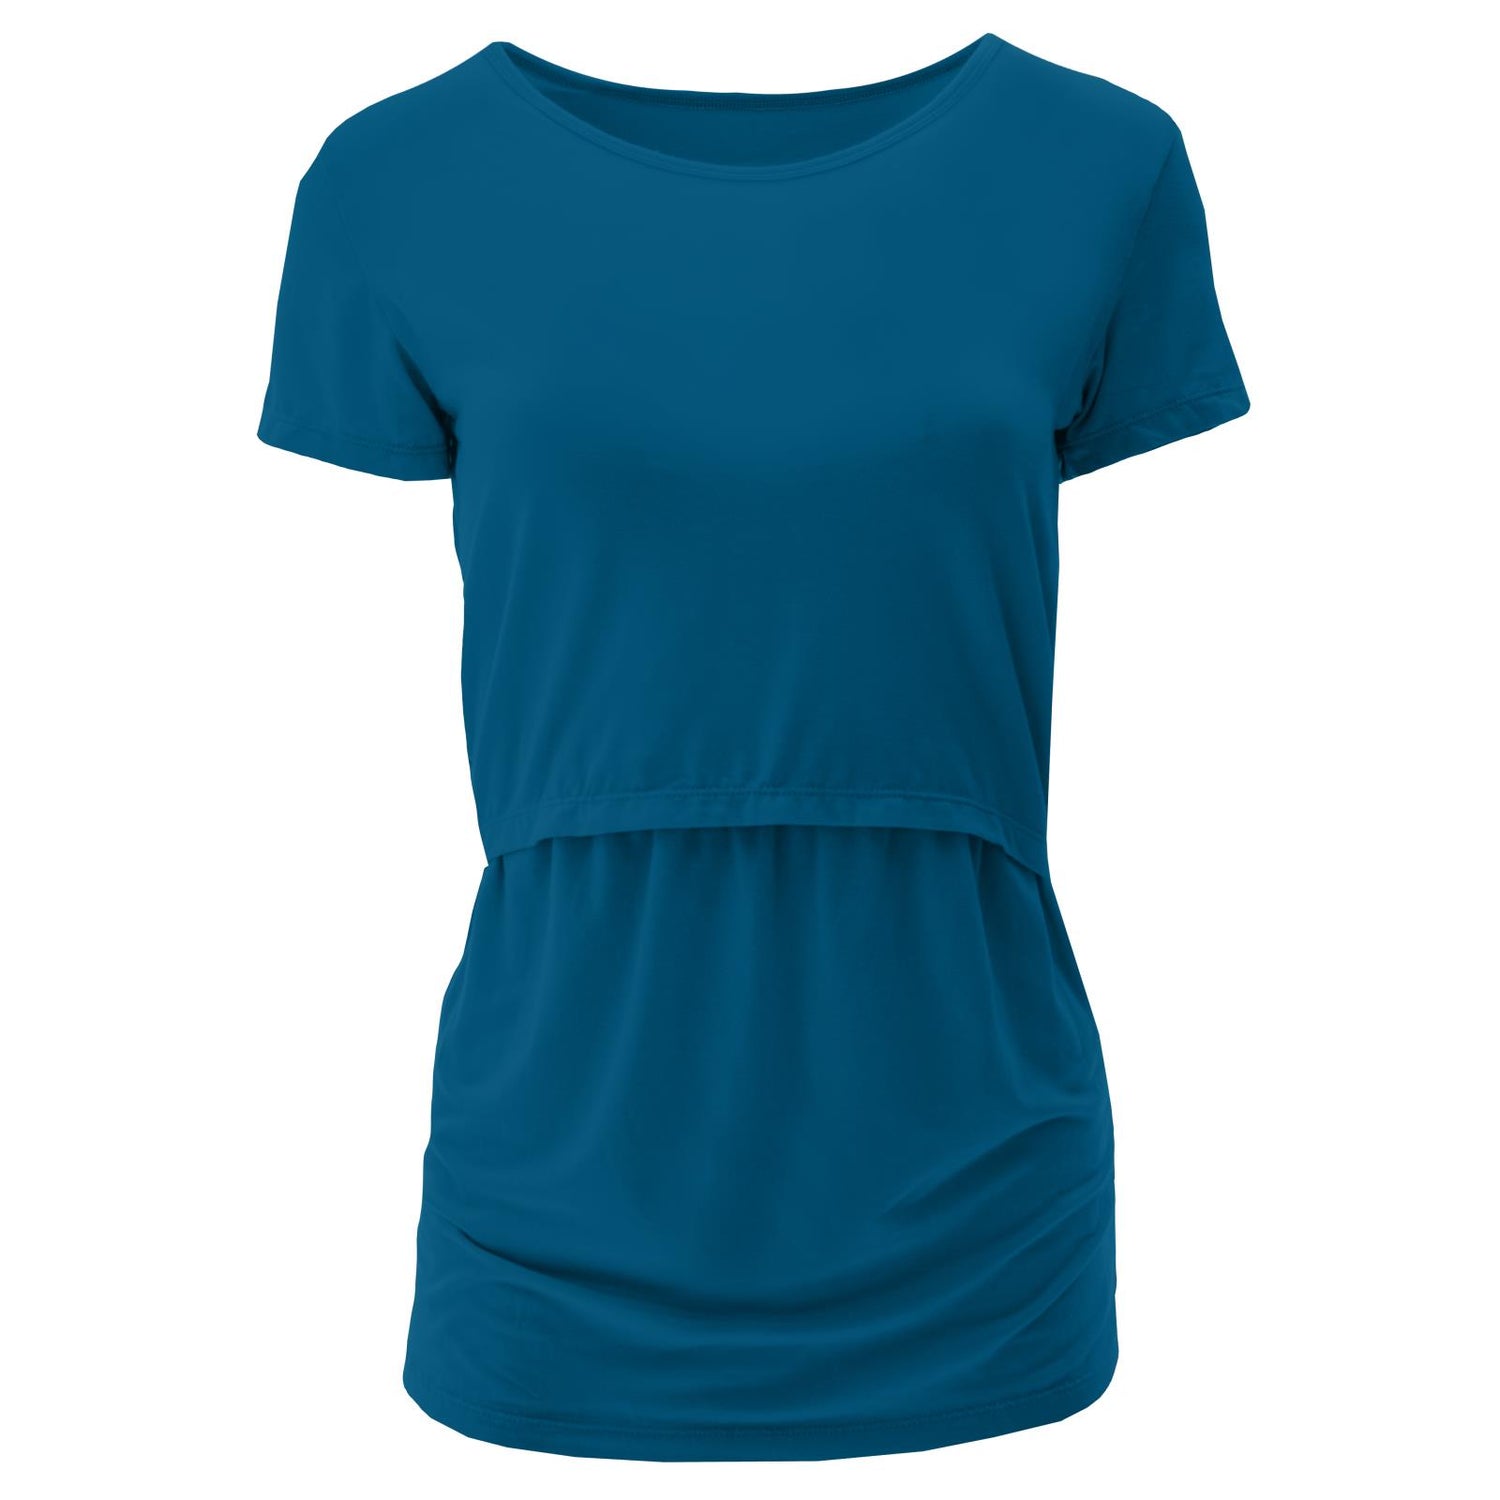 Women's Solid Short Sleeve Nursing Tee in Cerulean Blue